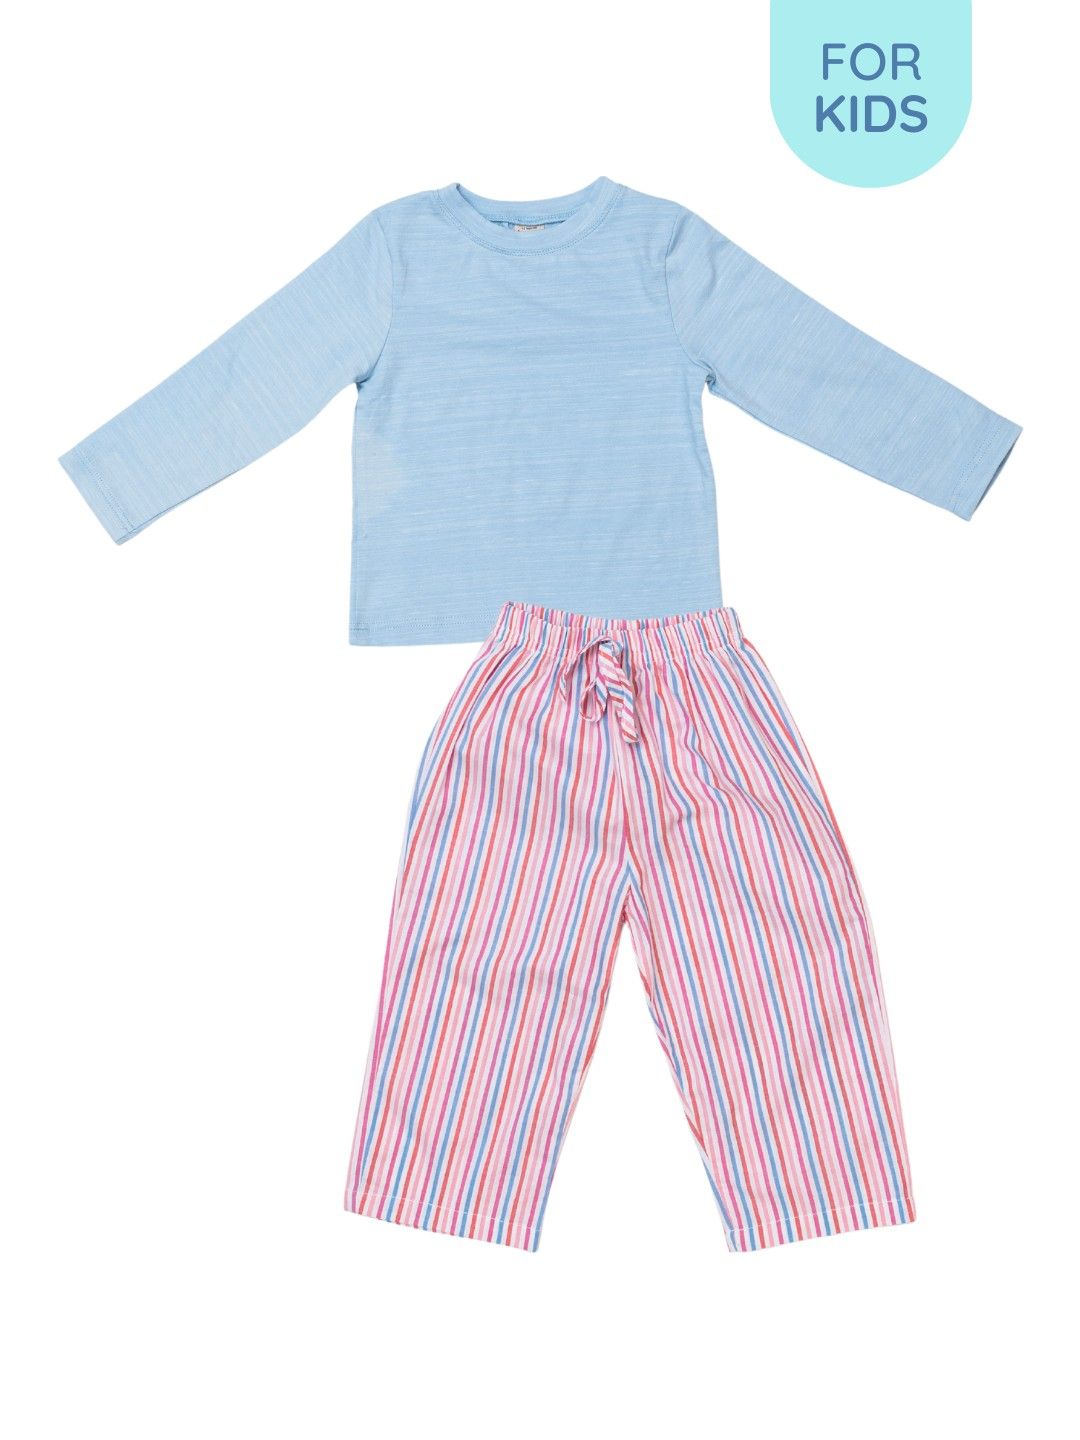 bean fashion Striped Sleep Pajama Set for Boys (No Color- Image 1)